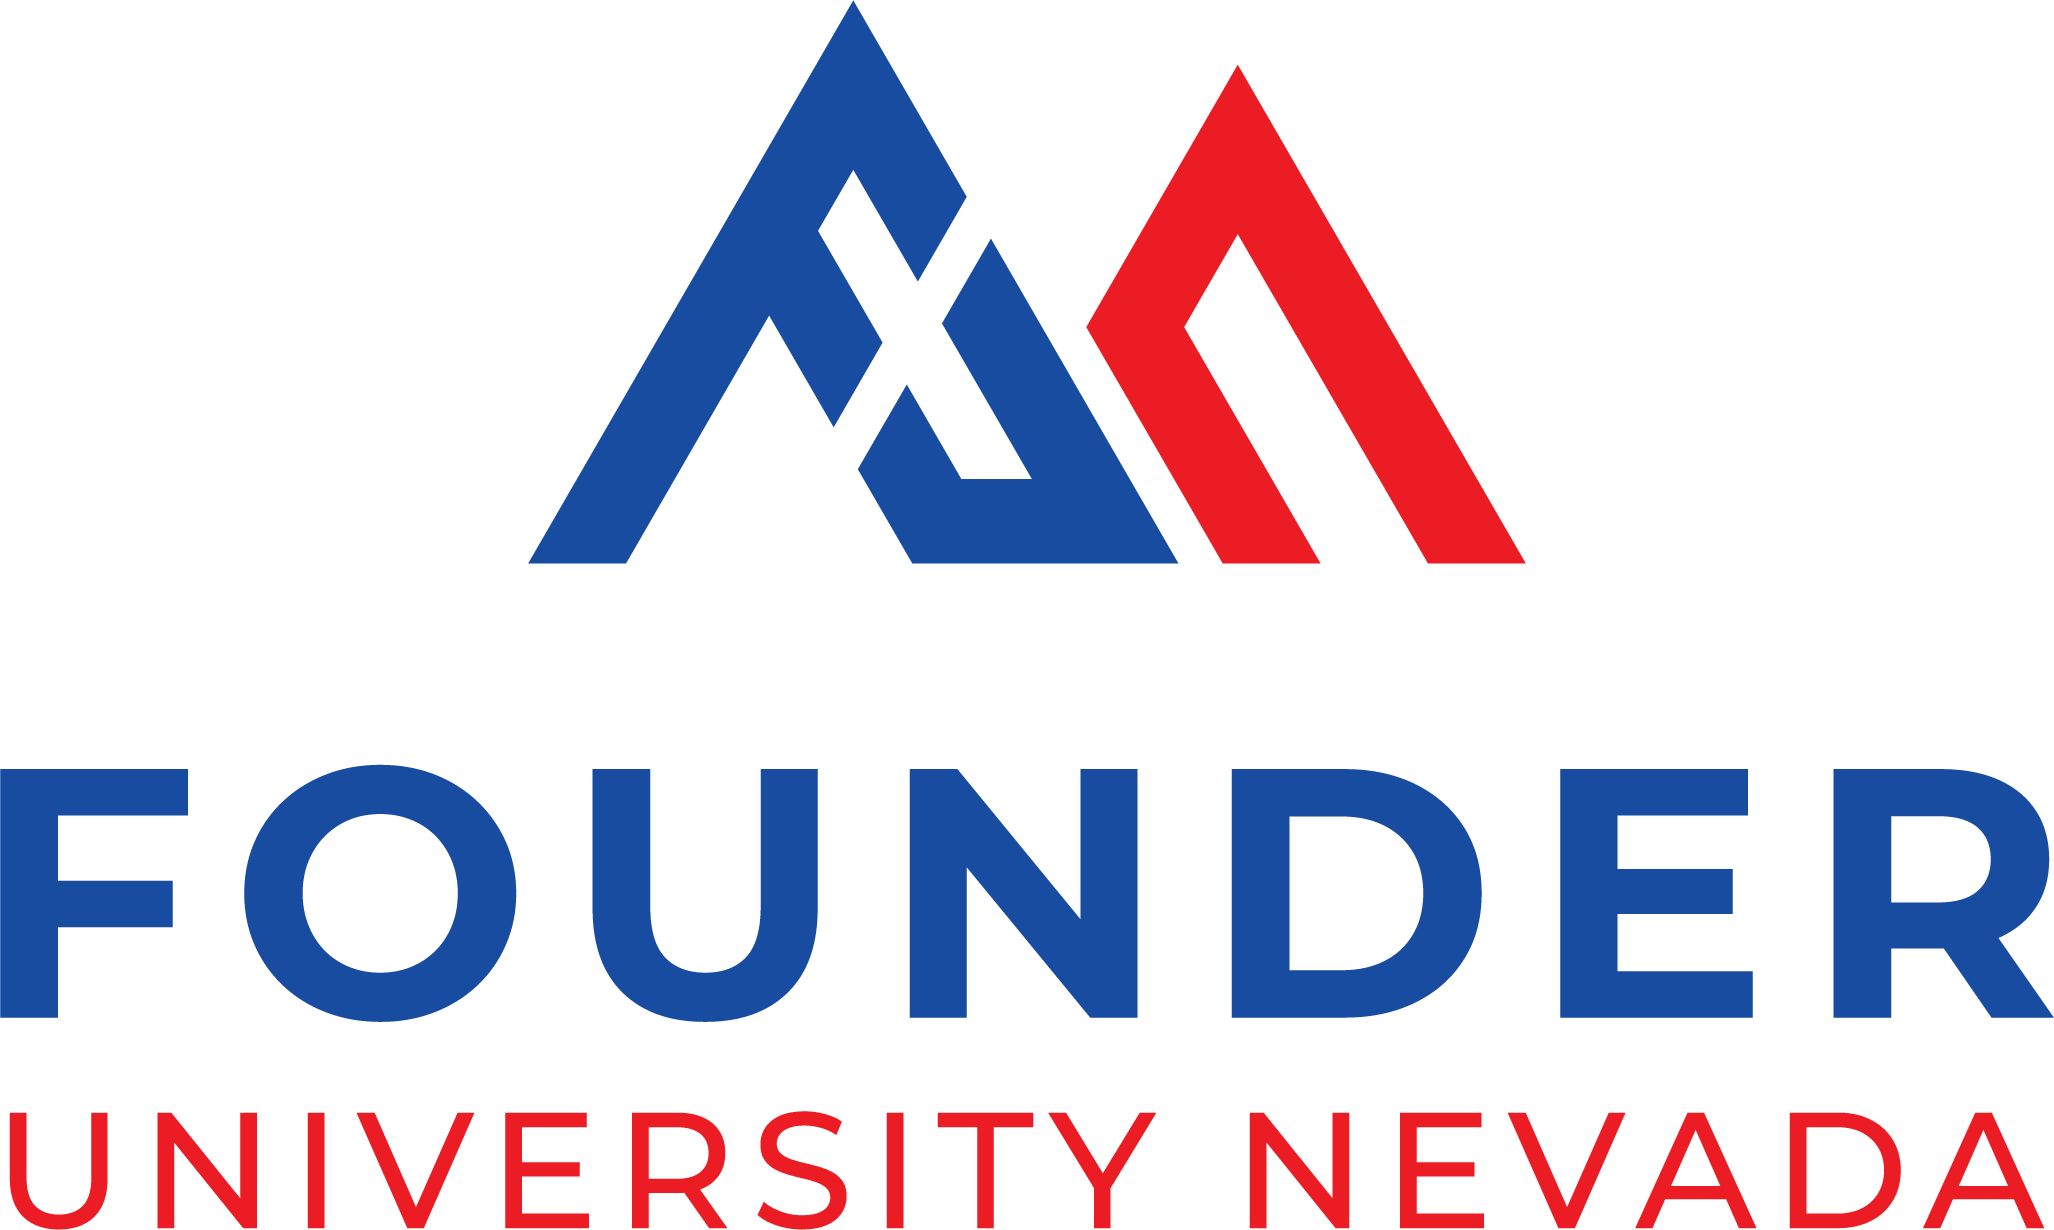 Founder University Nevada nevada angel investors 1